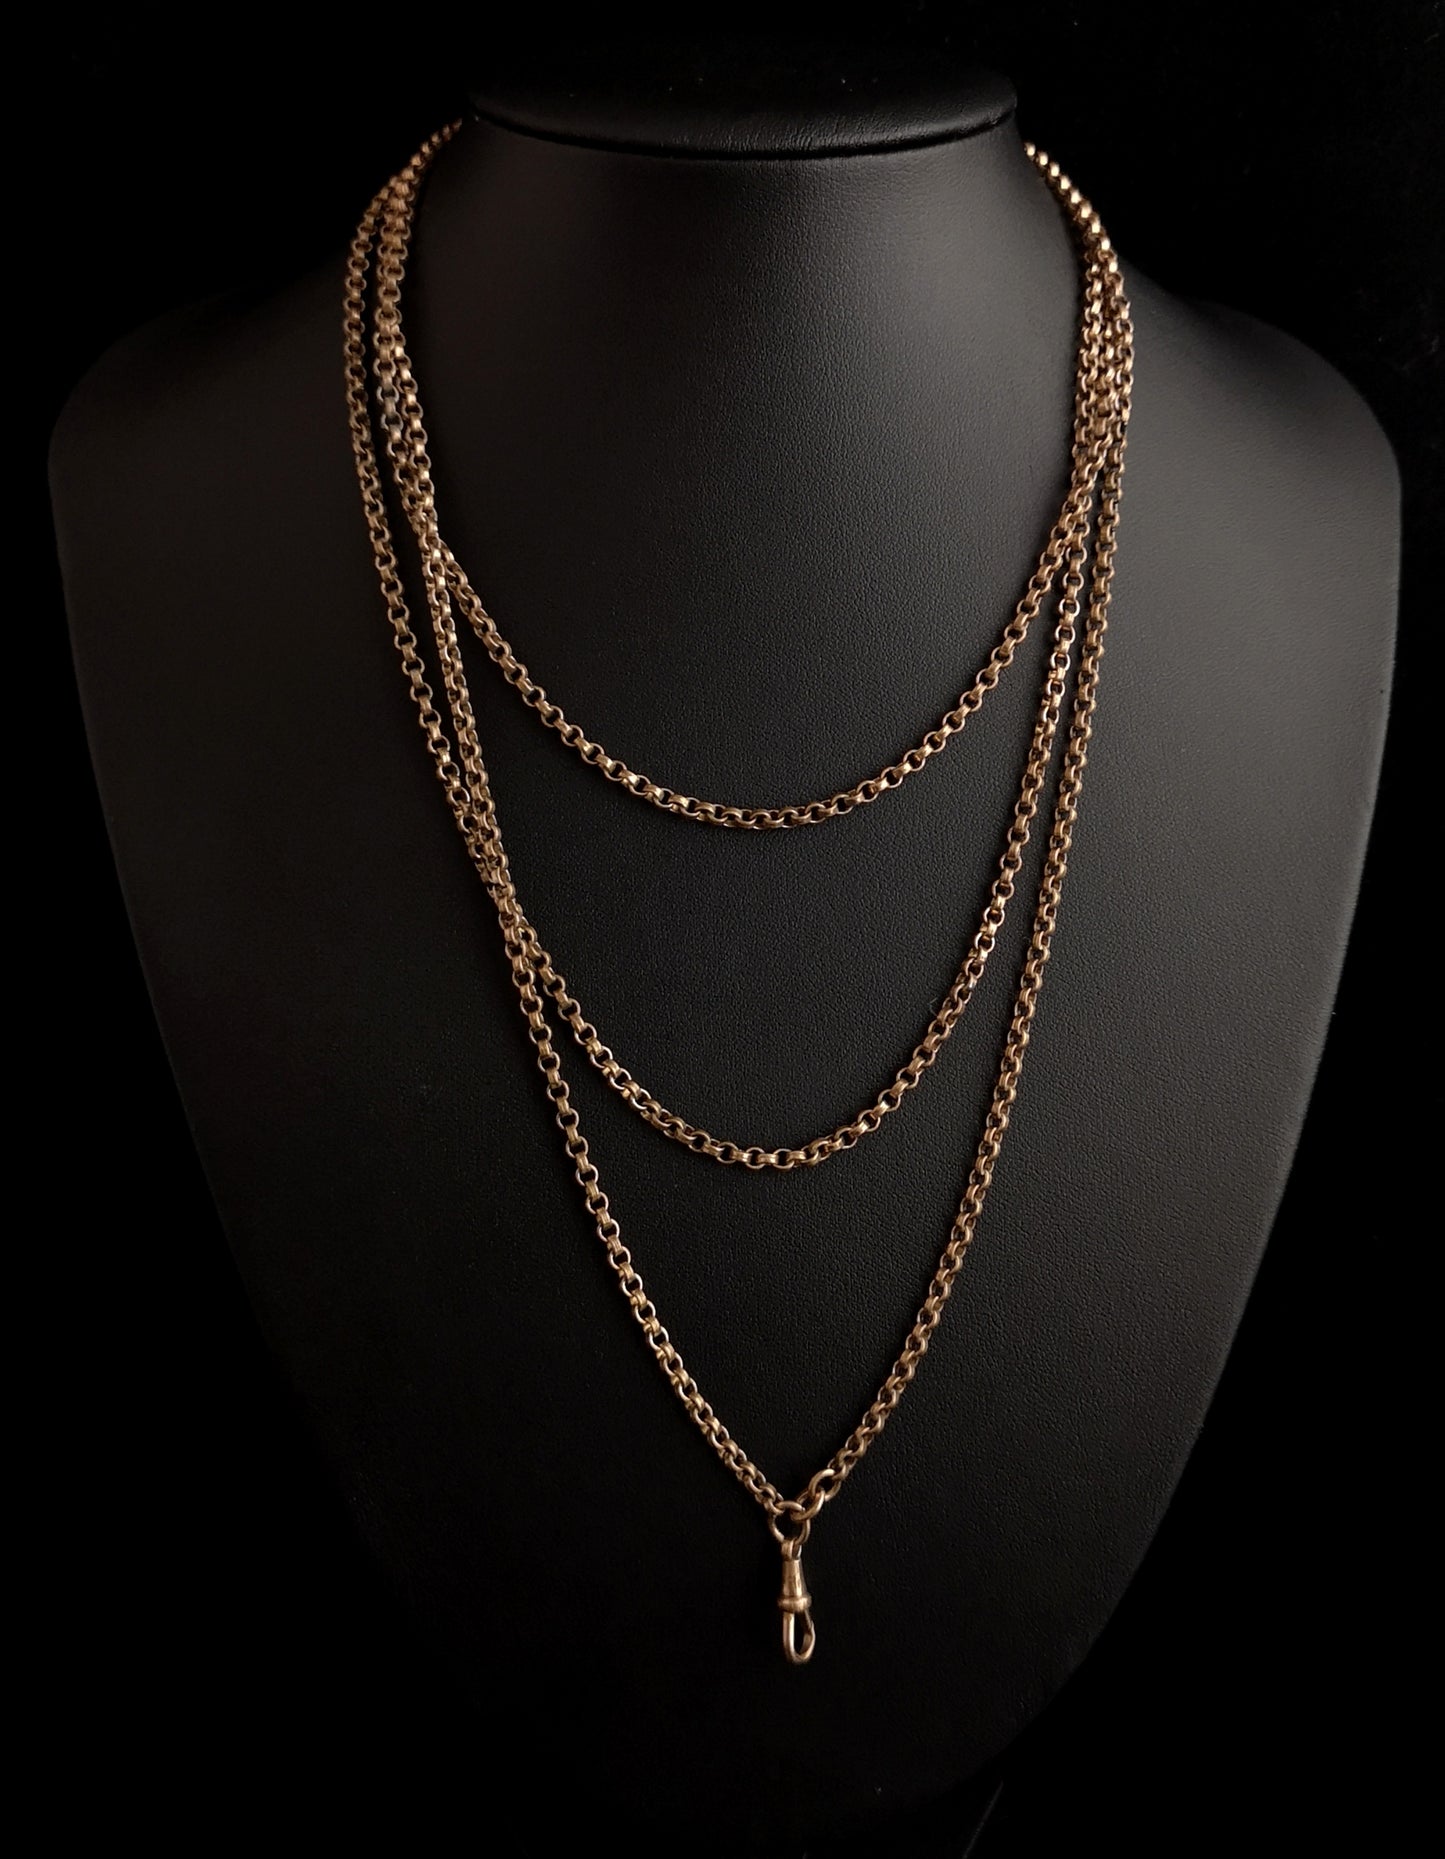 Antique Victorian longuard chain, muff chain necklace